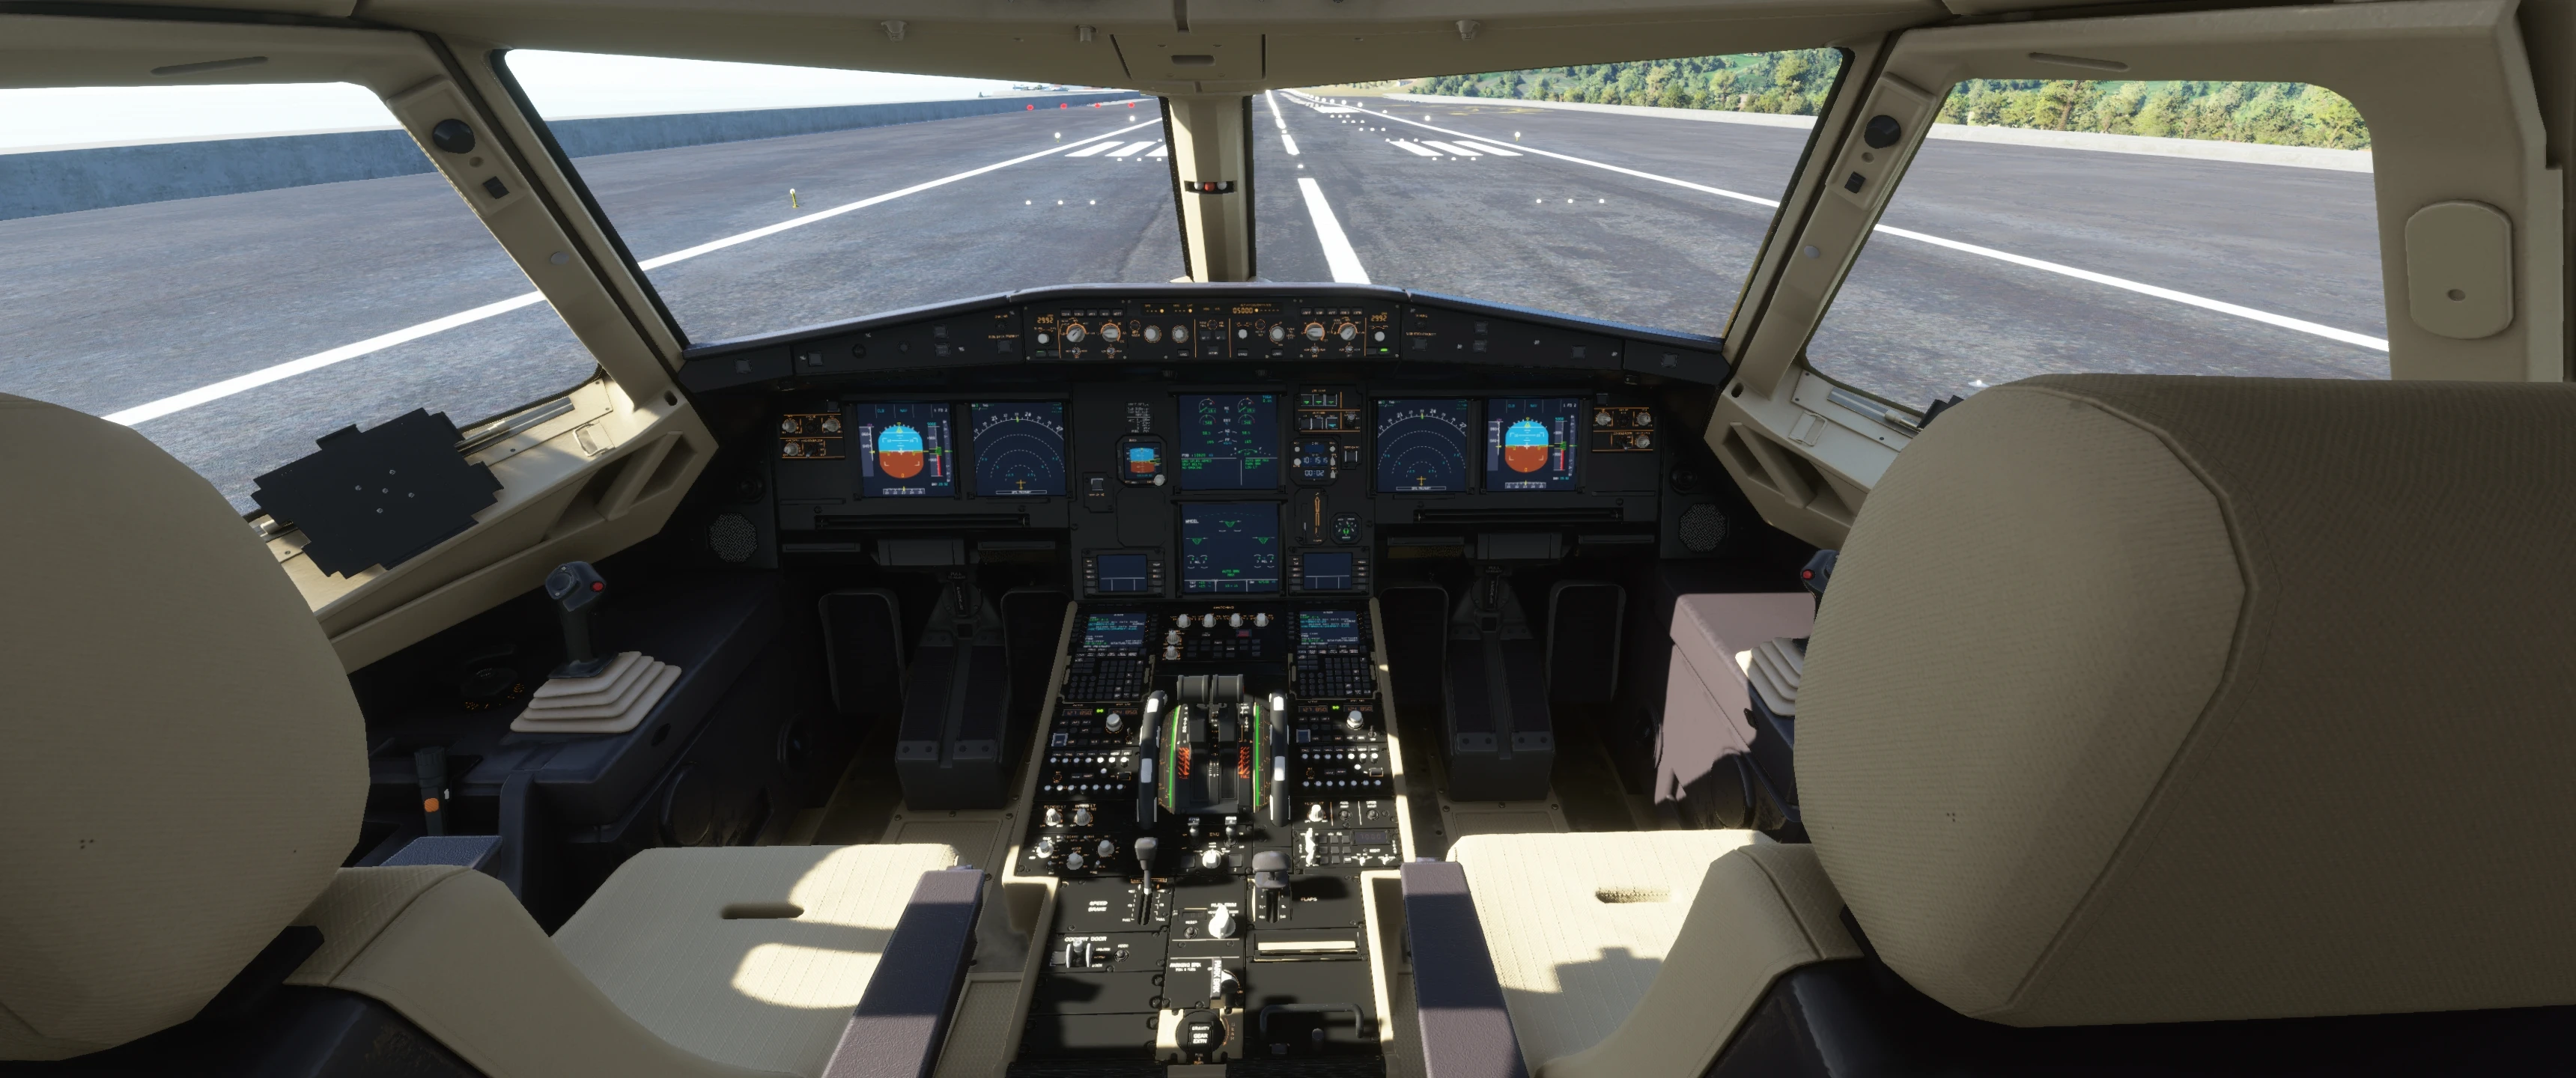 A And Fbw A Nx Jds Black Cockpit Mod Microsoft Flight Simulator